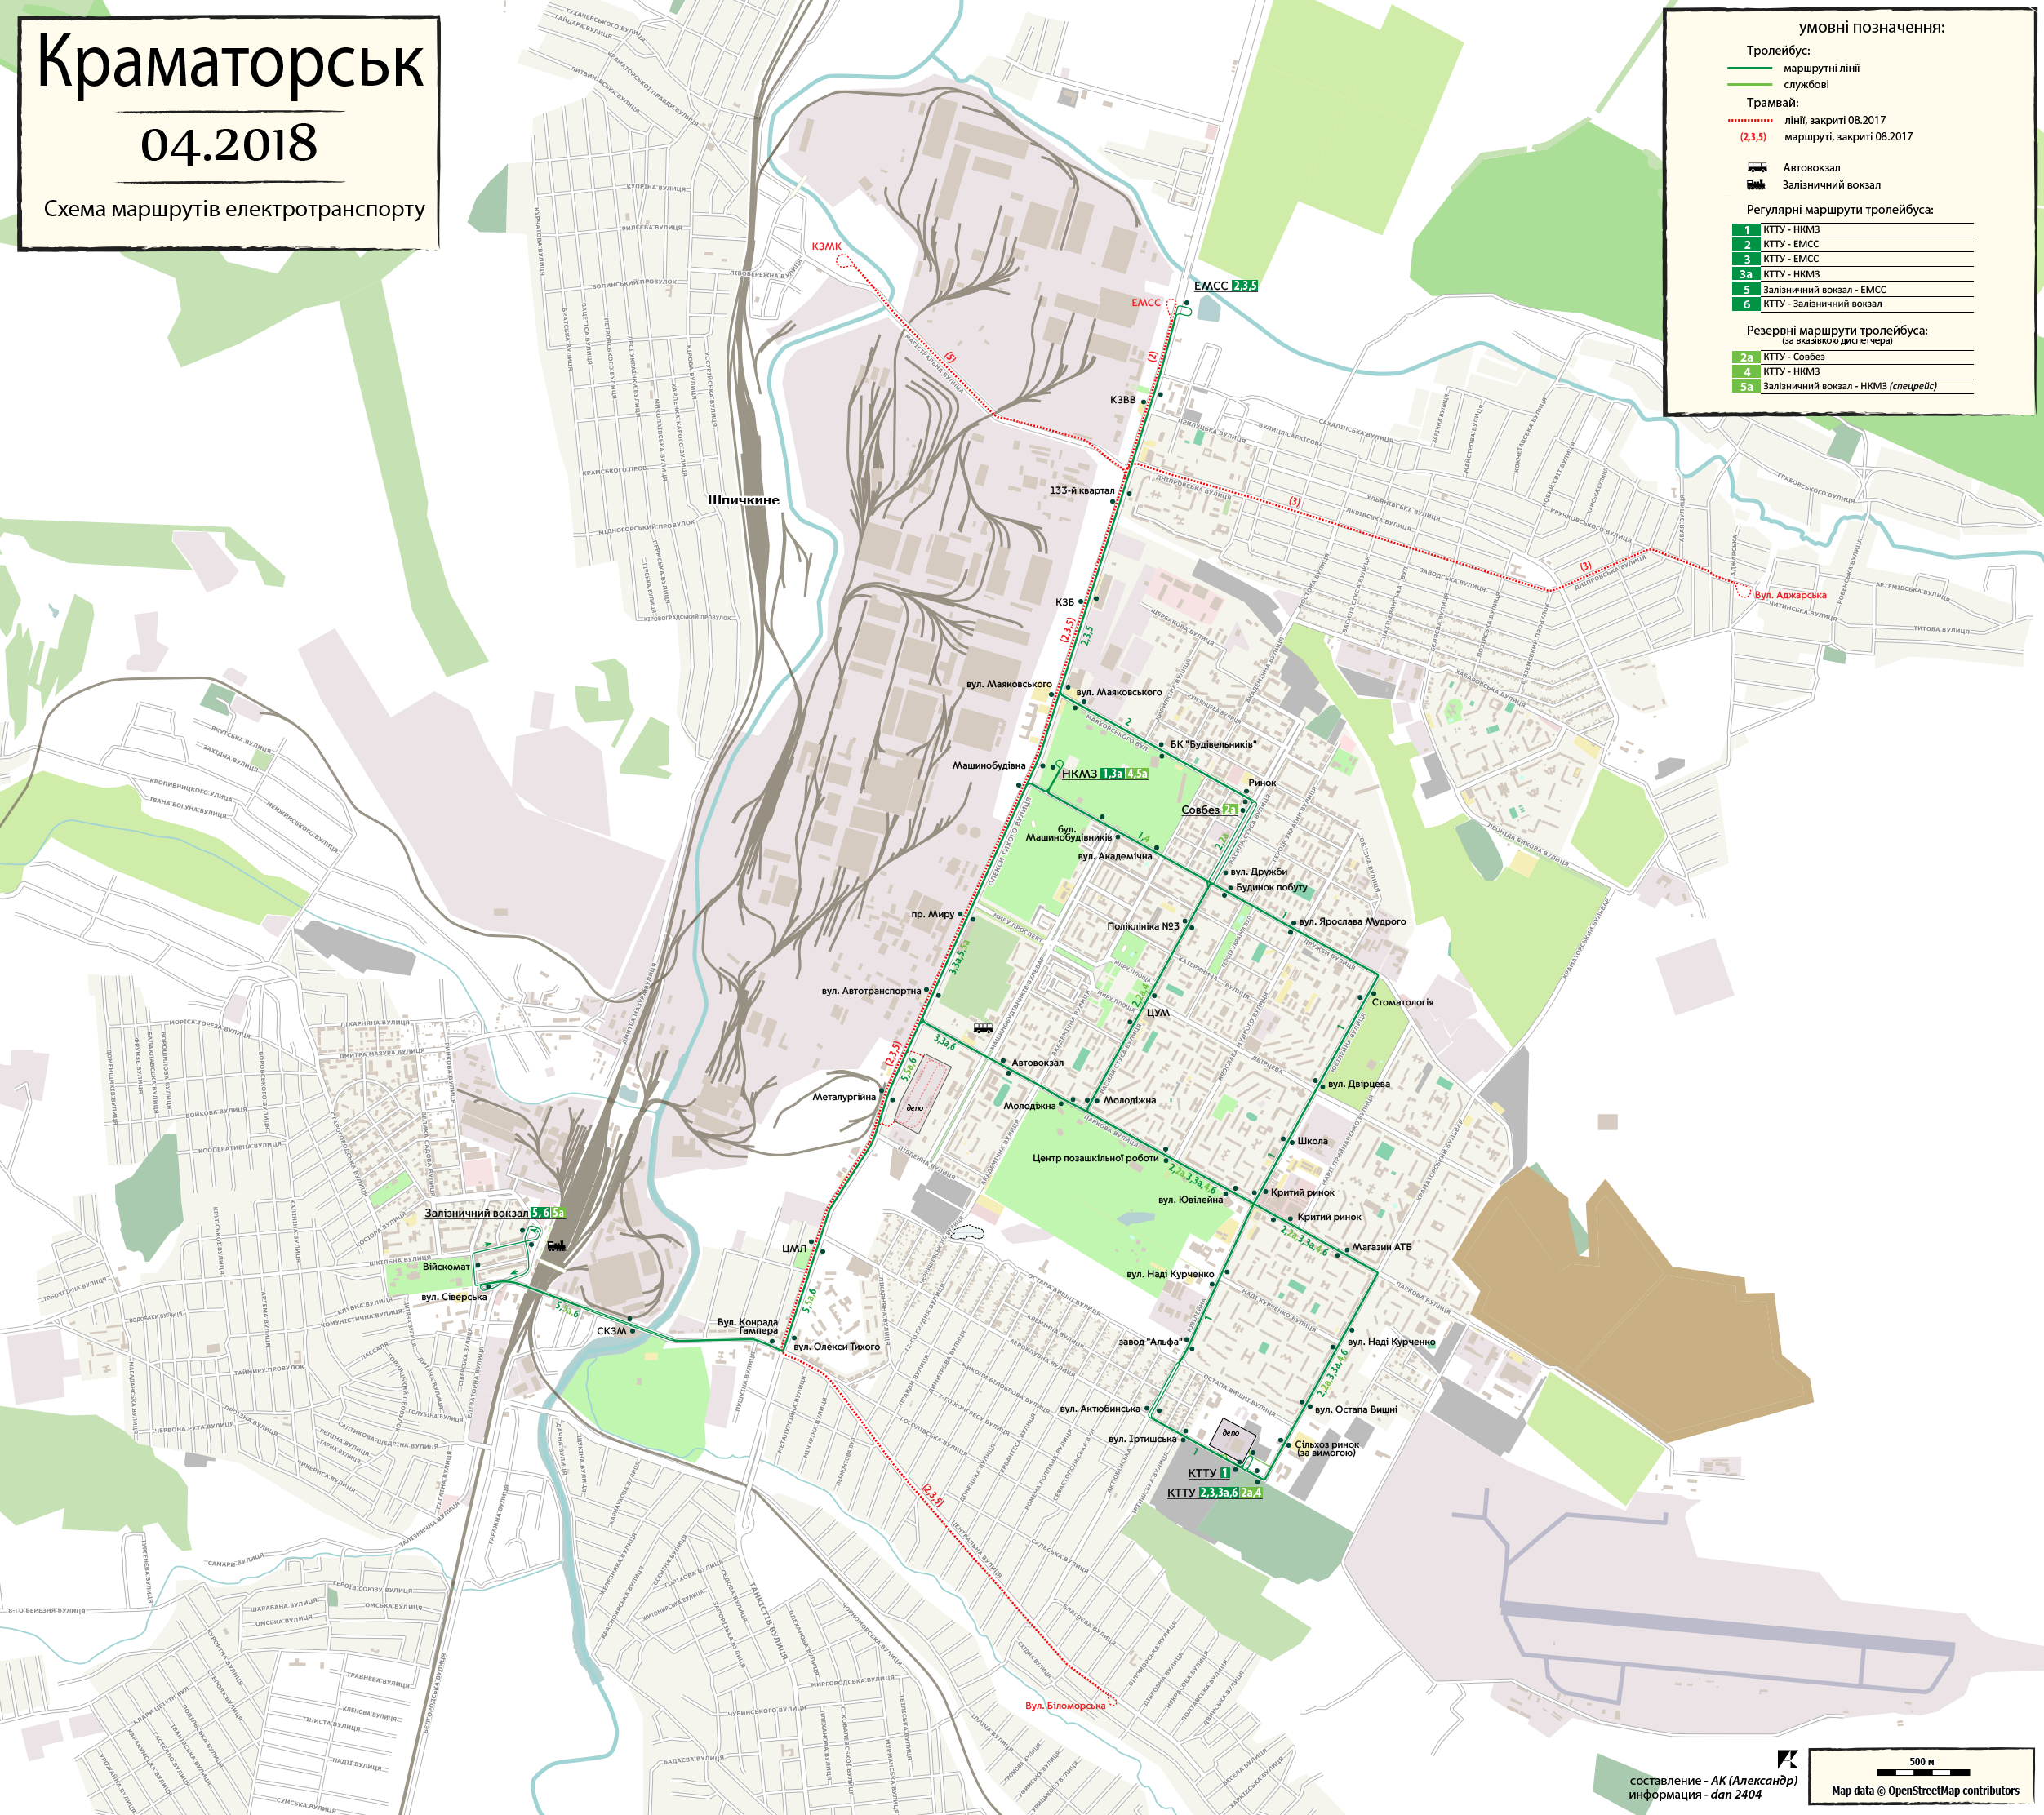 Kramatorszk — Maps